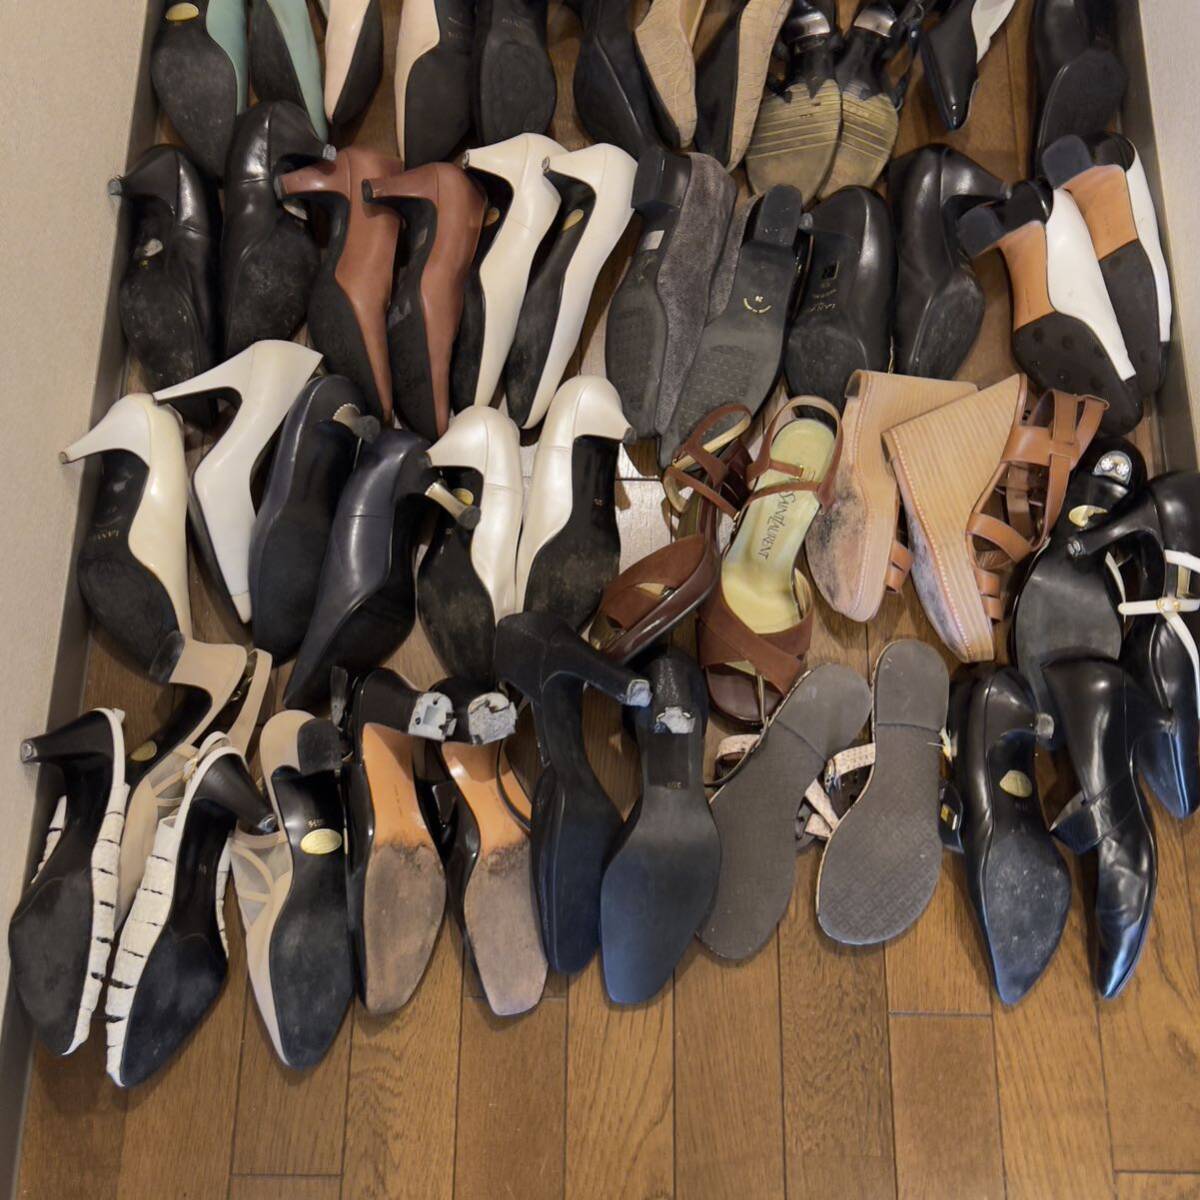 1 start set sale 30 pairs set brand shoes pumps sandals Ferragamo YSL LANVIN TORY BURCH COACH ARMANI LANCEL VALENTINO Junk 